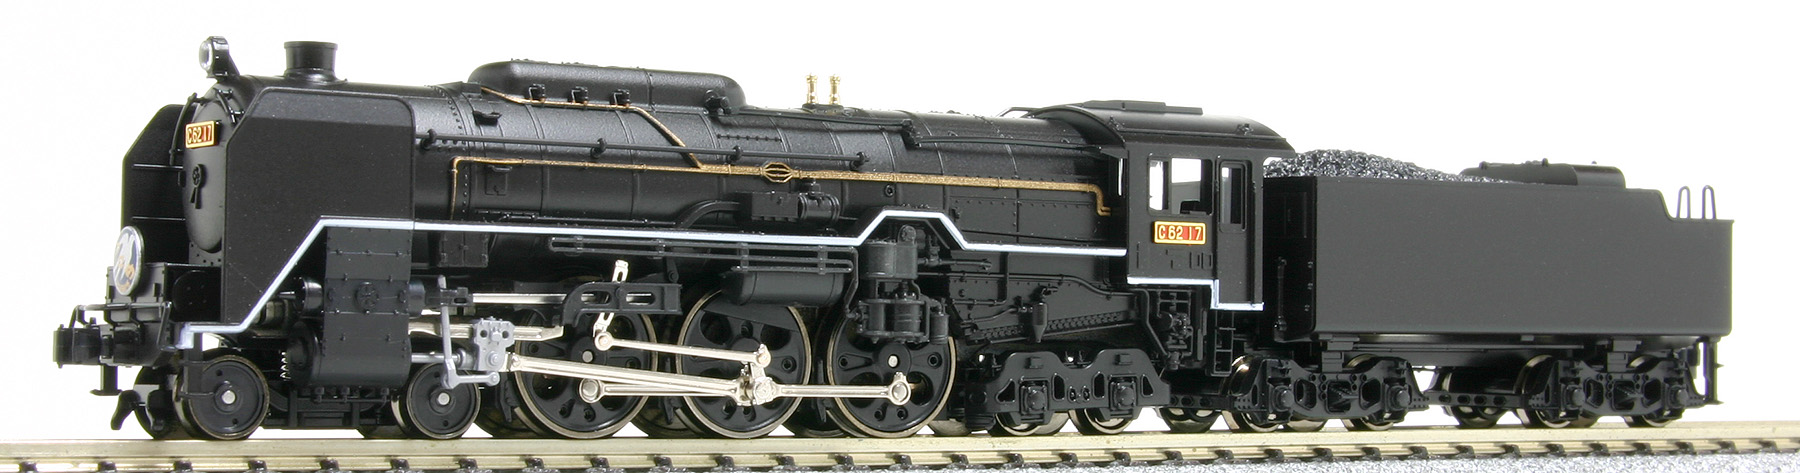 Ｃ６２ 2 東海道形（KATO）Ｎゲージ - 鉄道模型